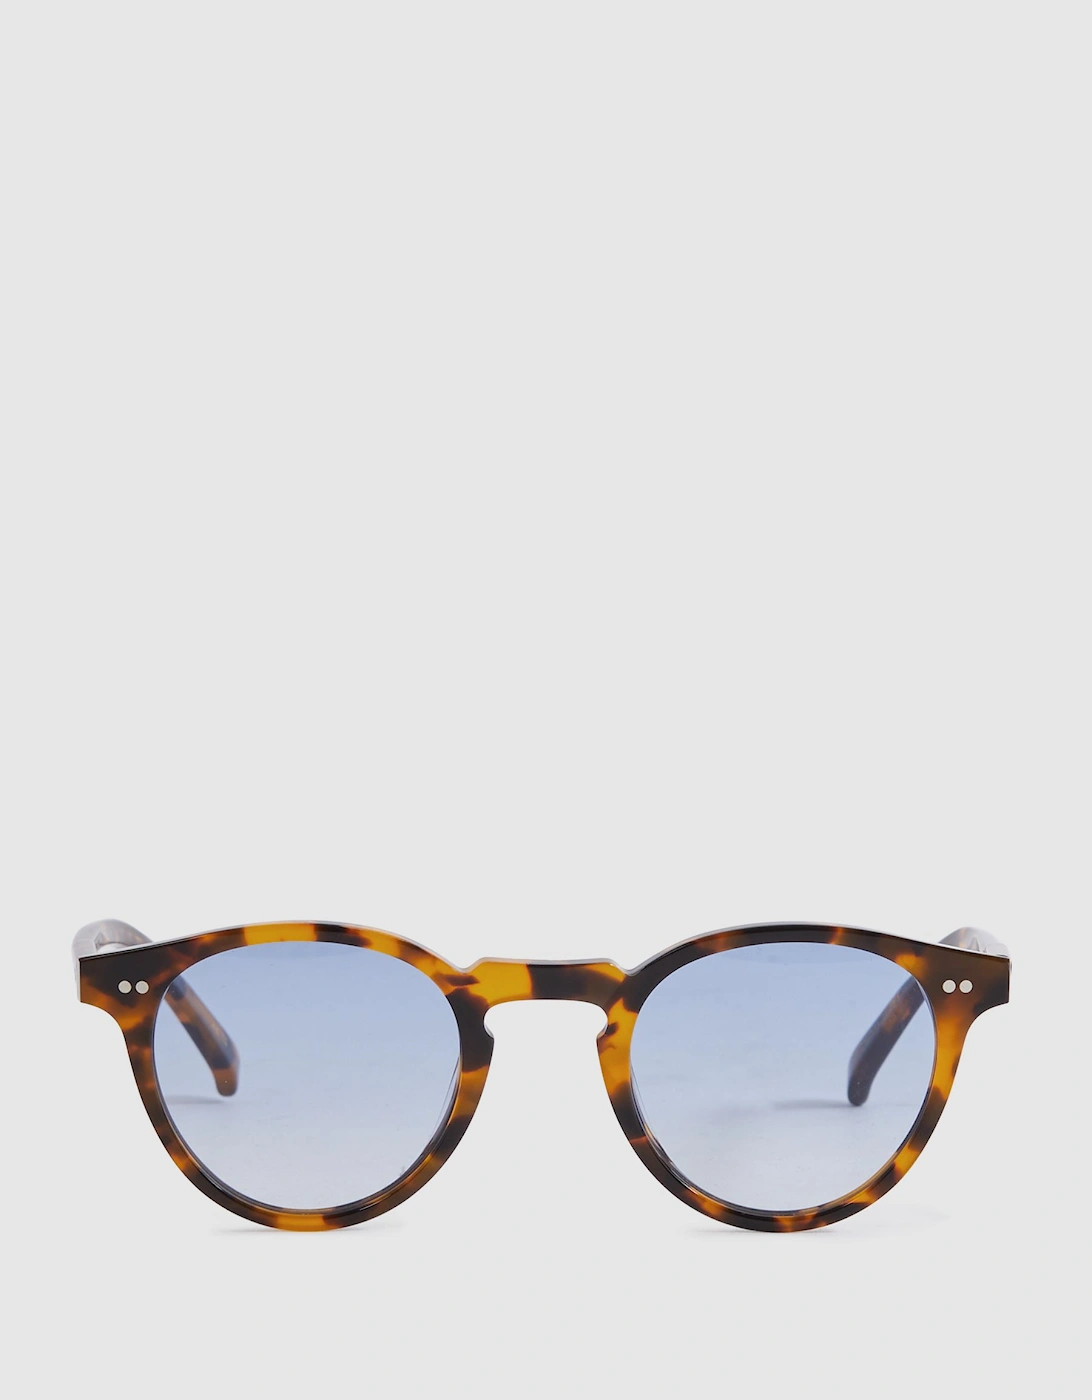 Monokel Eyewear Tortoise Round Sunglasses, 2 of 1